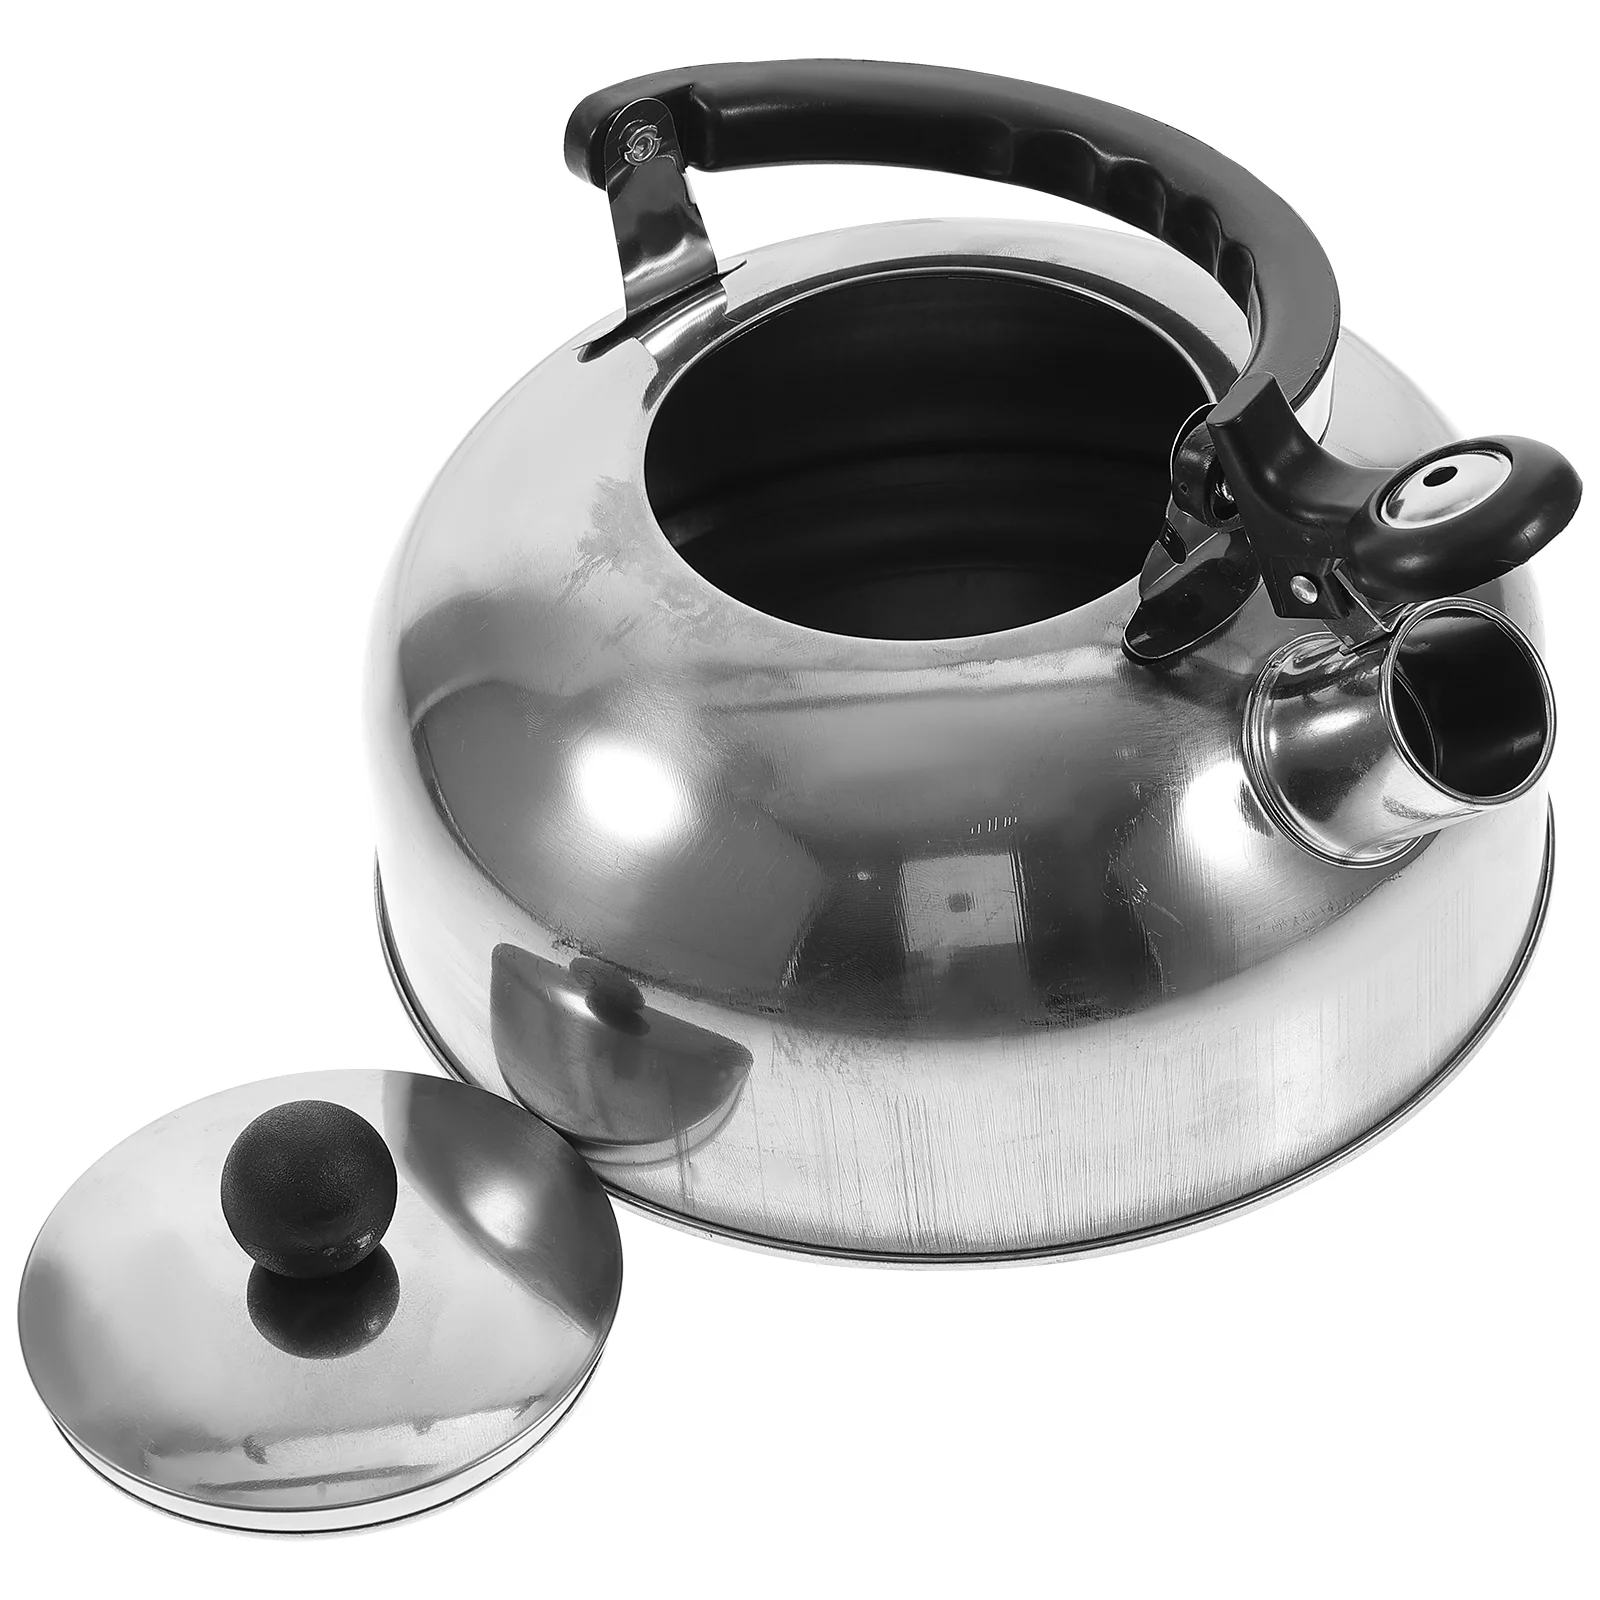 

Kettle Tea Steel Stainless Stove Whistling Water Stovetop Teapot Boiling Boiler Pots Pot Loud Gas Hot Heating Kettles Teakettle